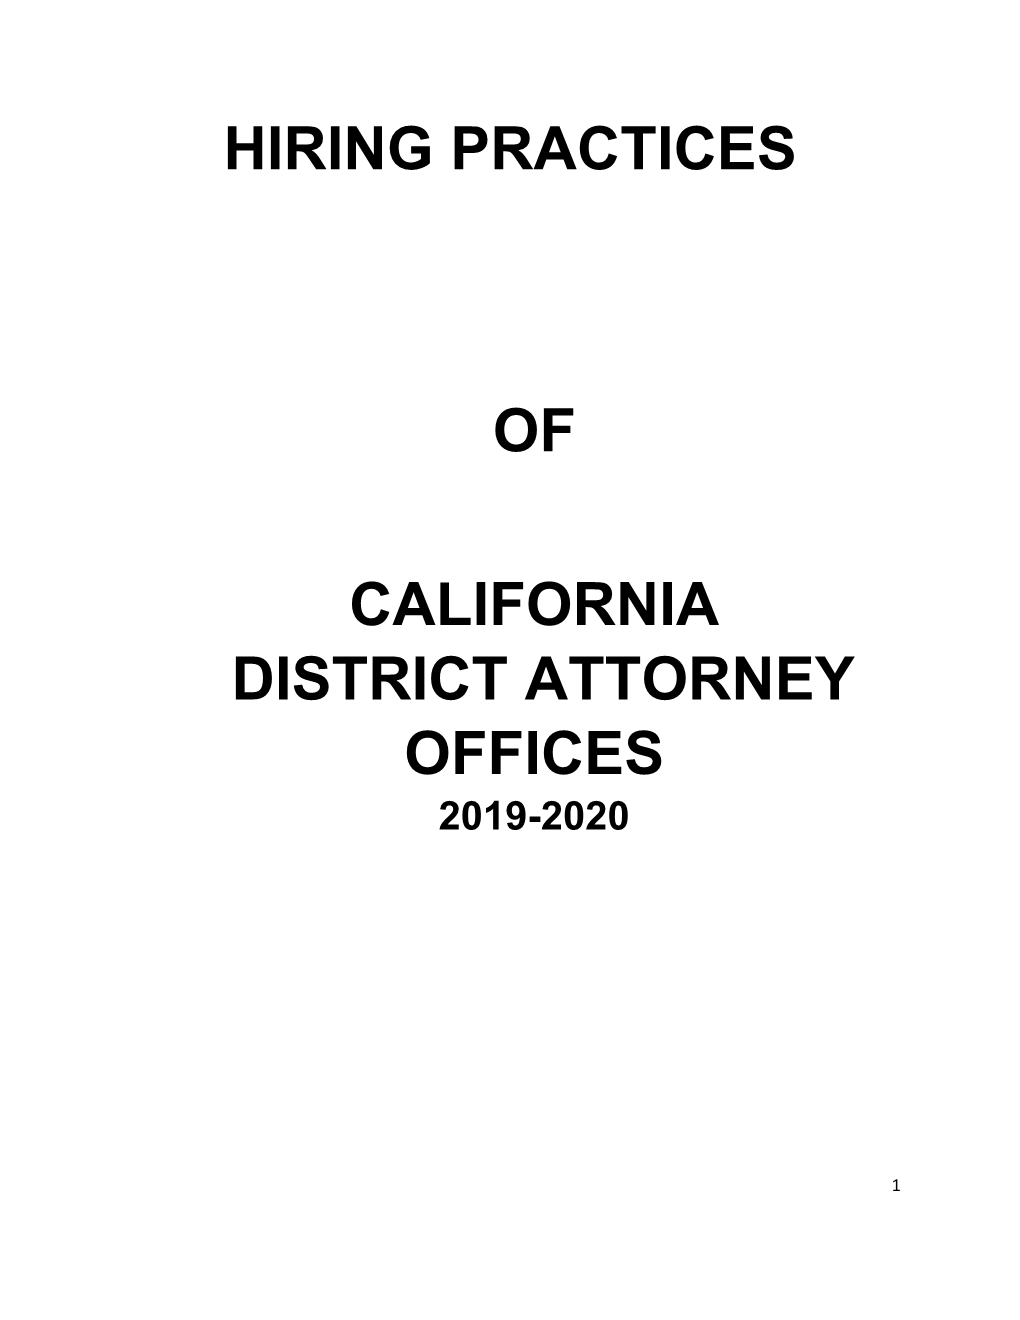 Hiring Practices of California District